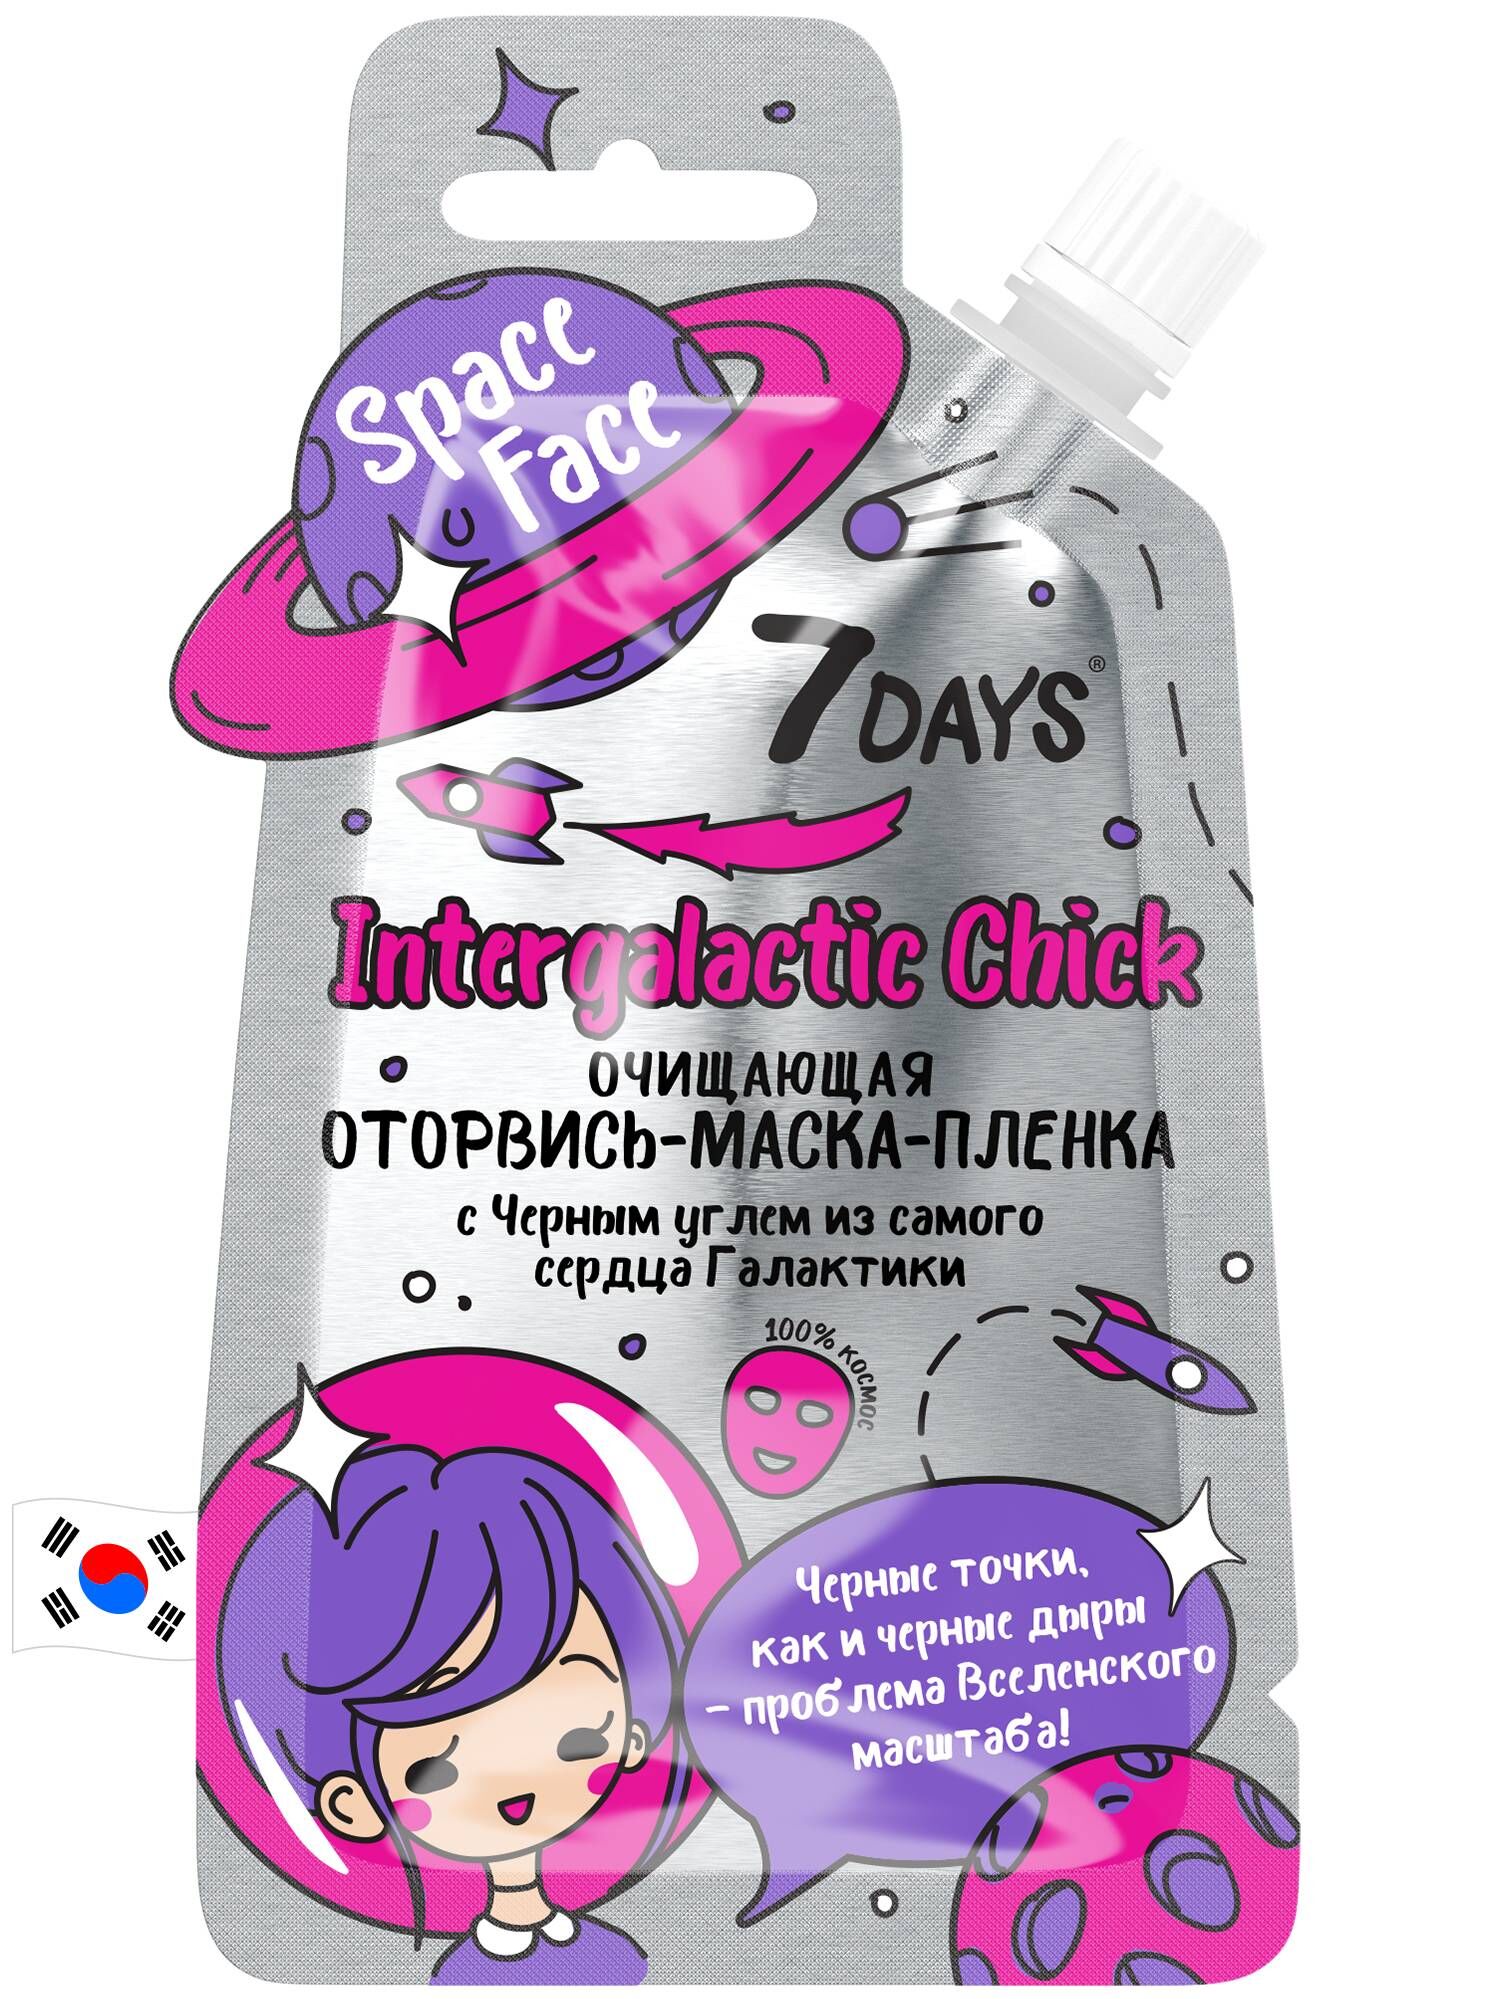 7 Days Space Face Оторвись-маска пленка Intergalactic Chick 20гр